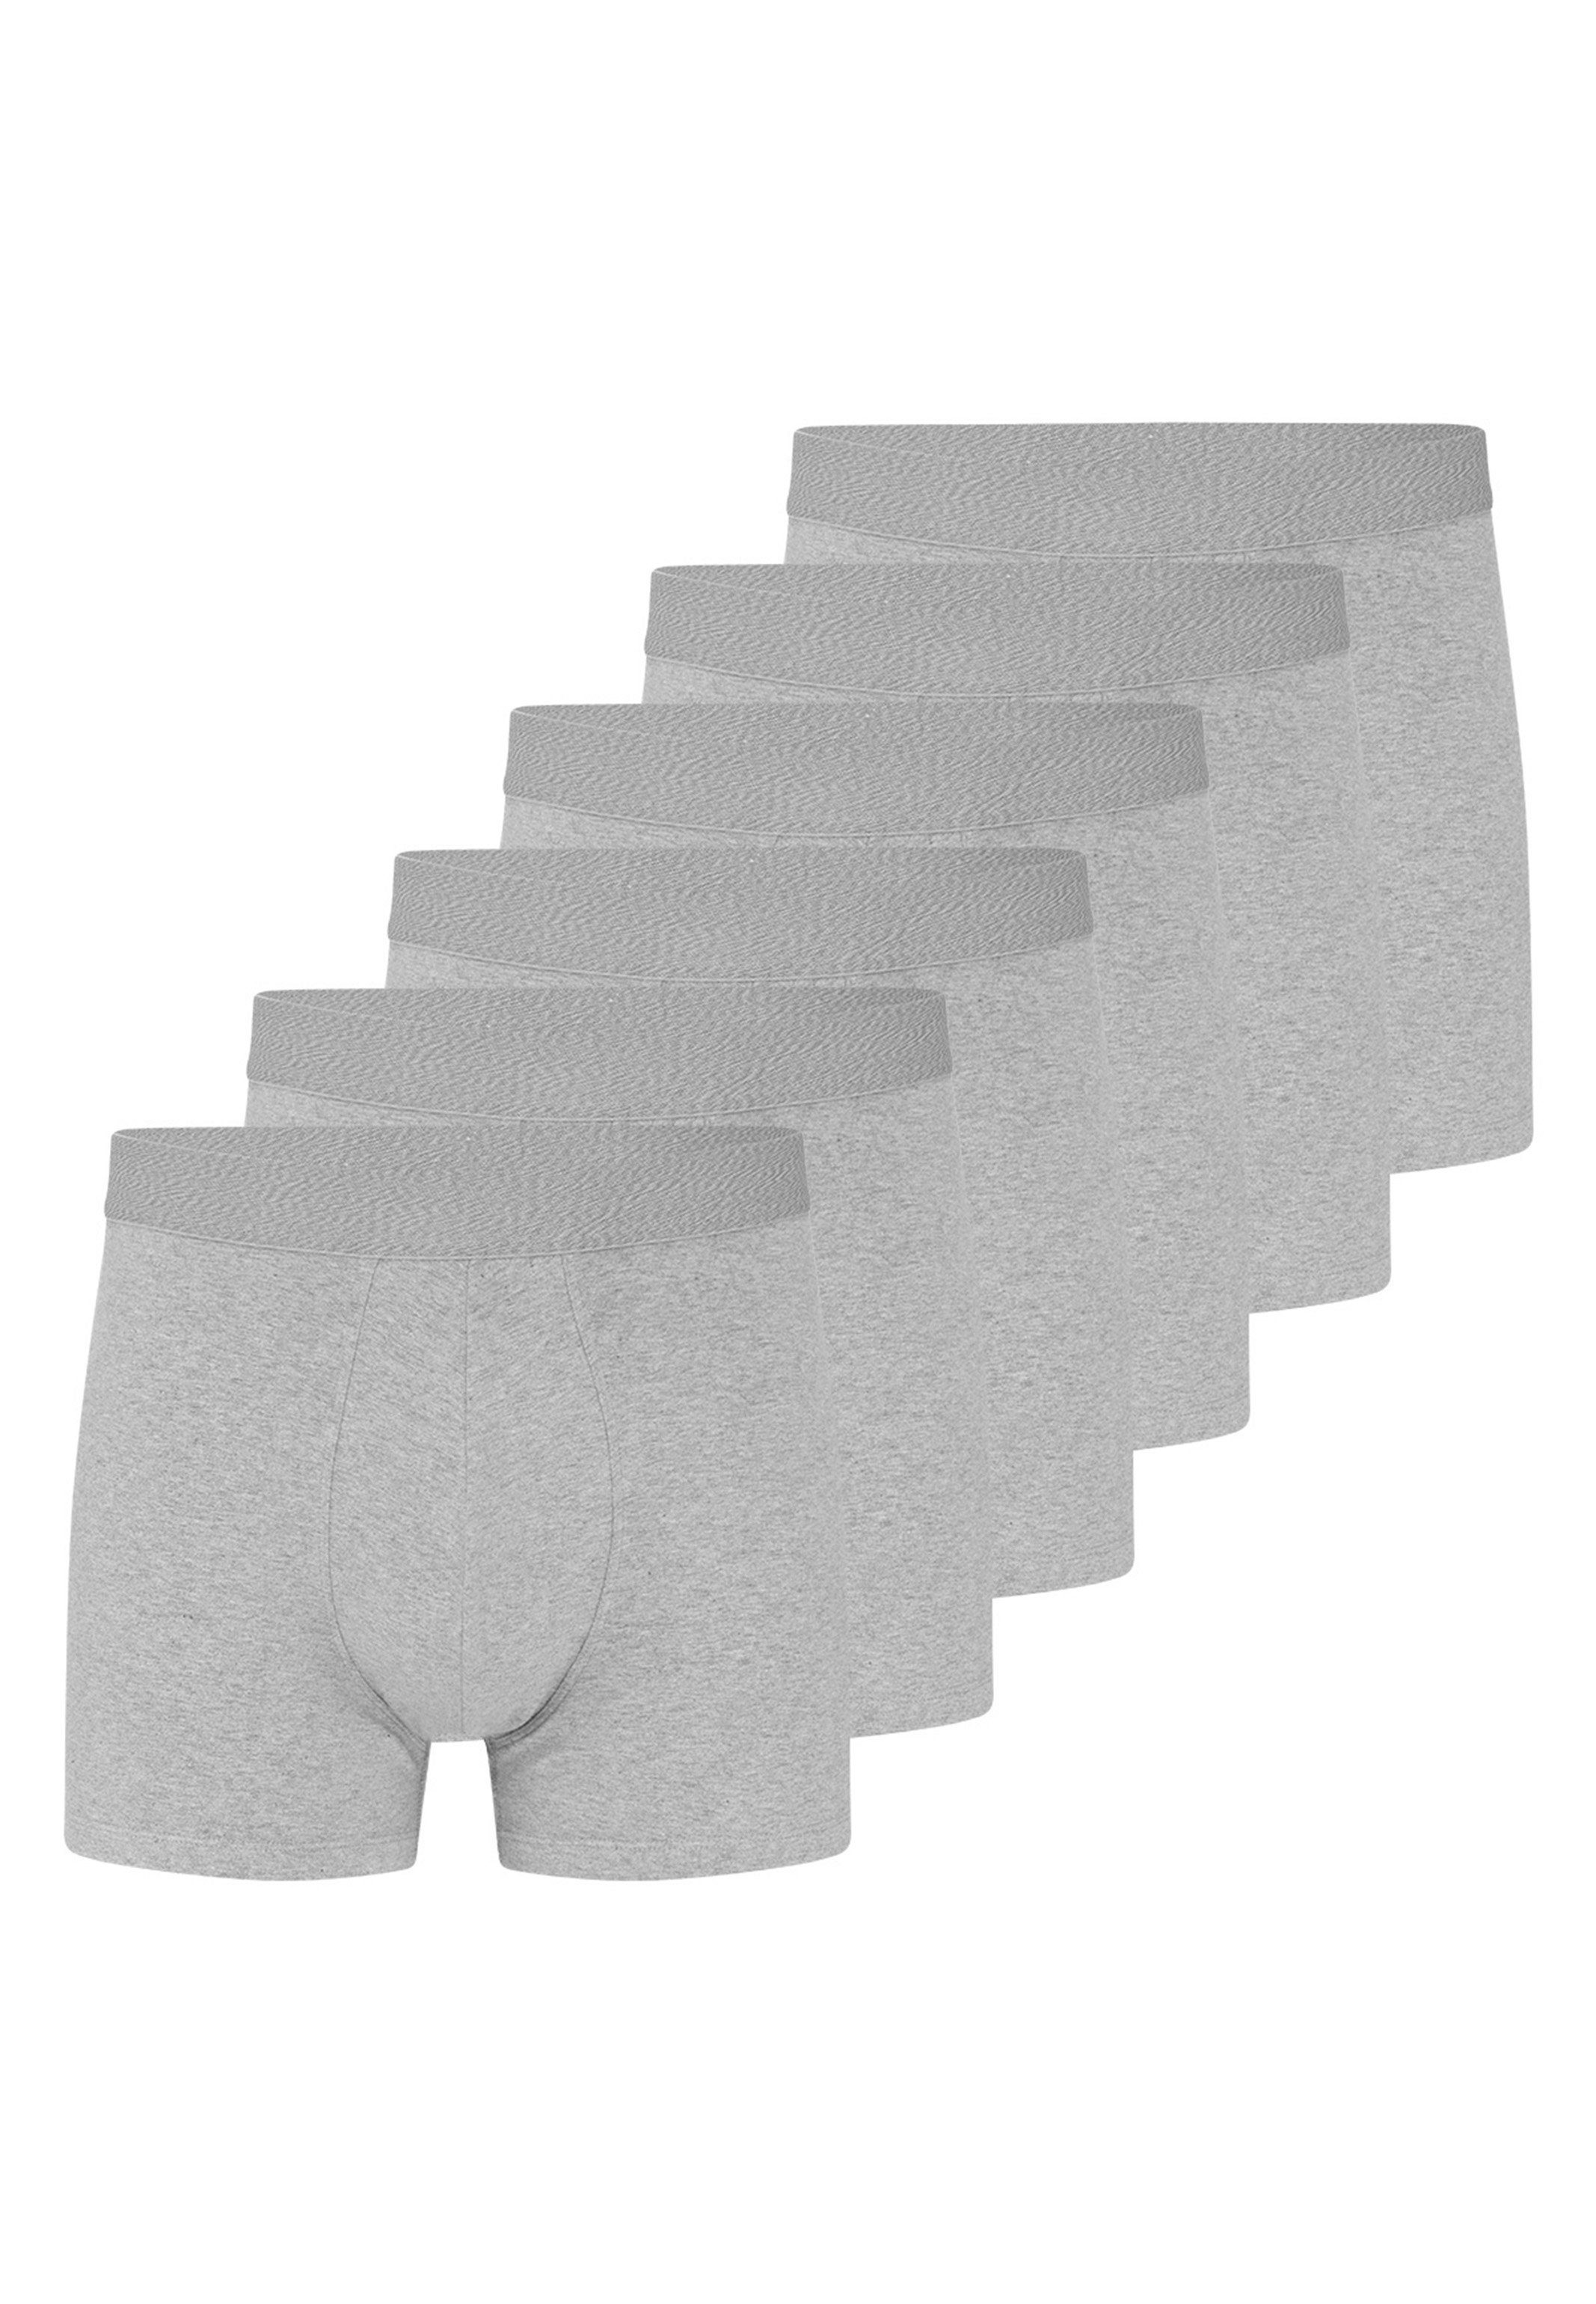 Almonu Retro Boxer 6er Pack Organic Cotton (Spar-Set, 6-St) Retro Short / Pant - Baumwolle - Ohne Eingriff - Atmungsaktiv Grau Melange